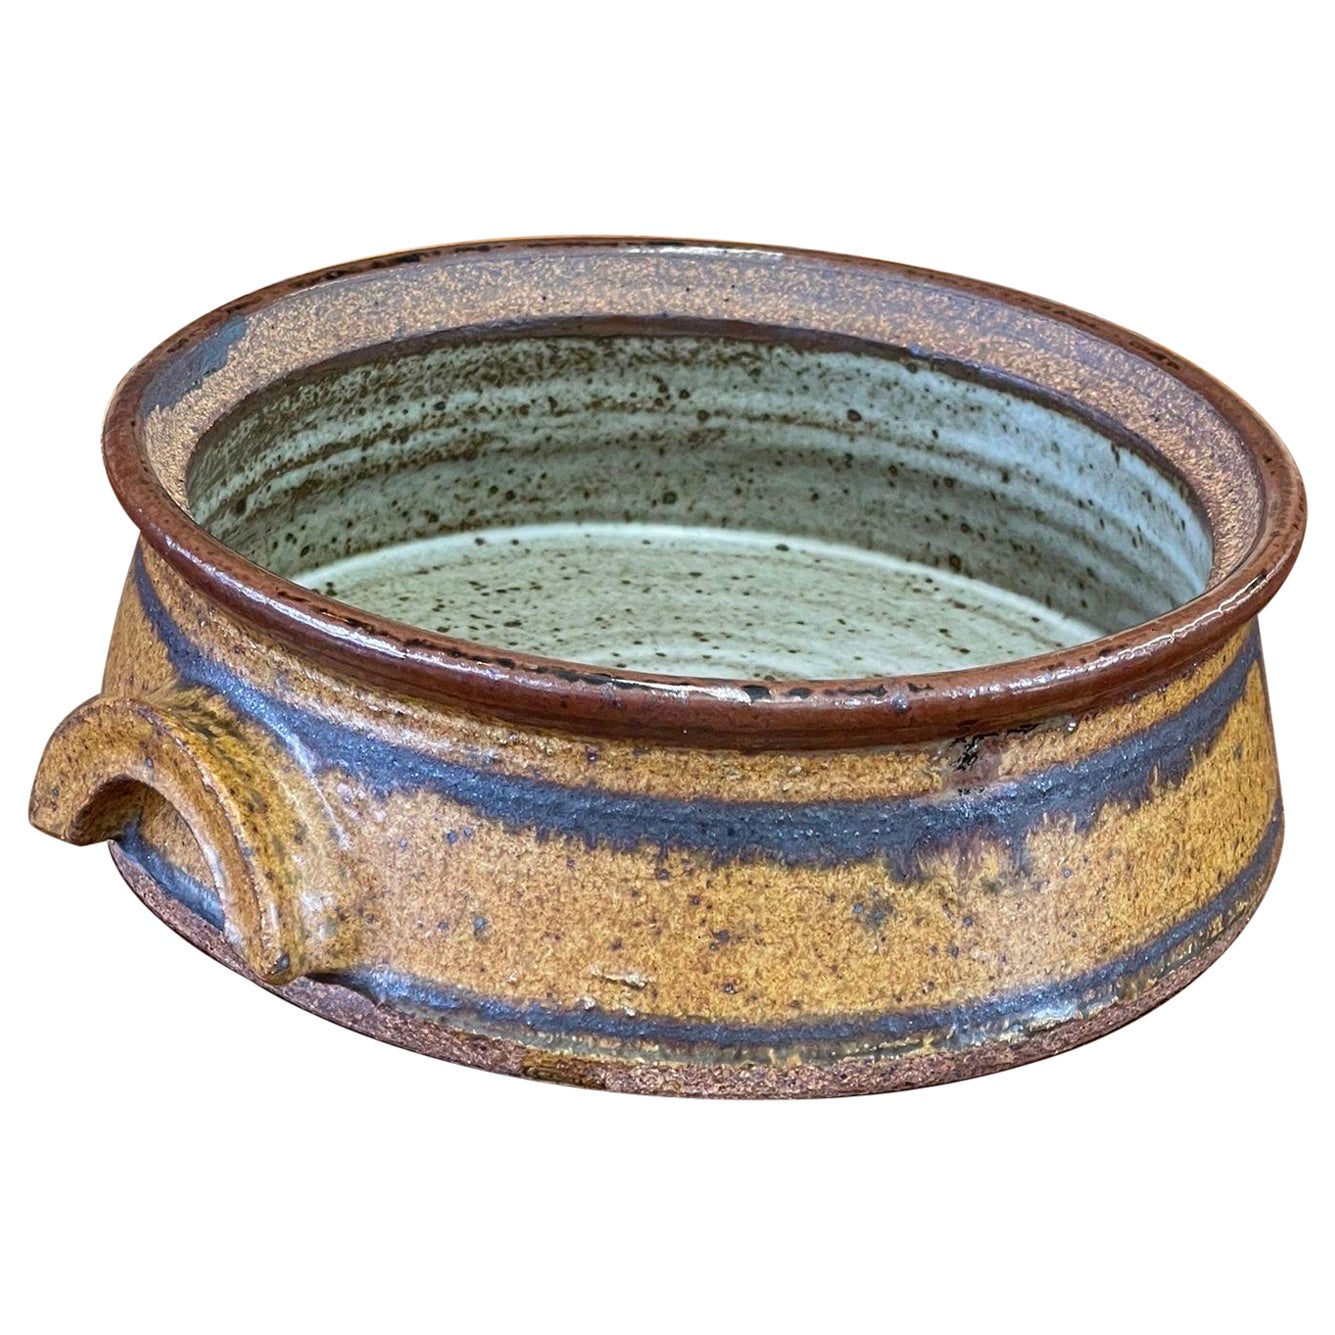 Unique Speckled Stoneware Bowl